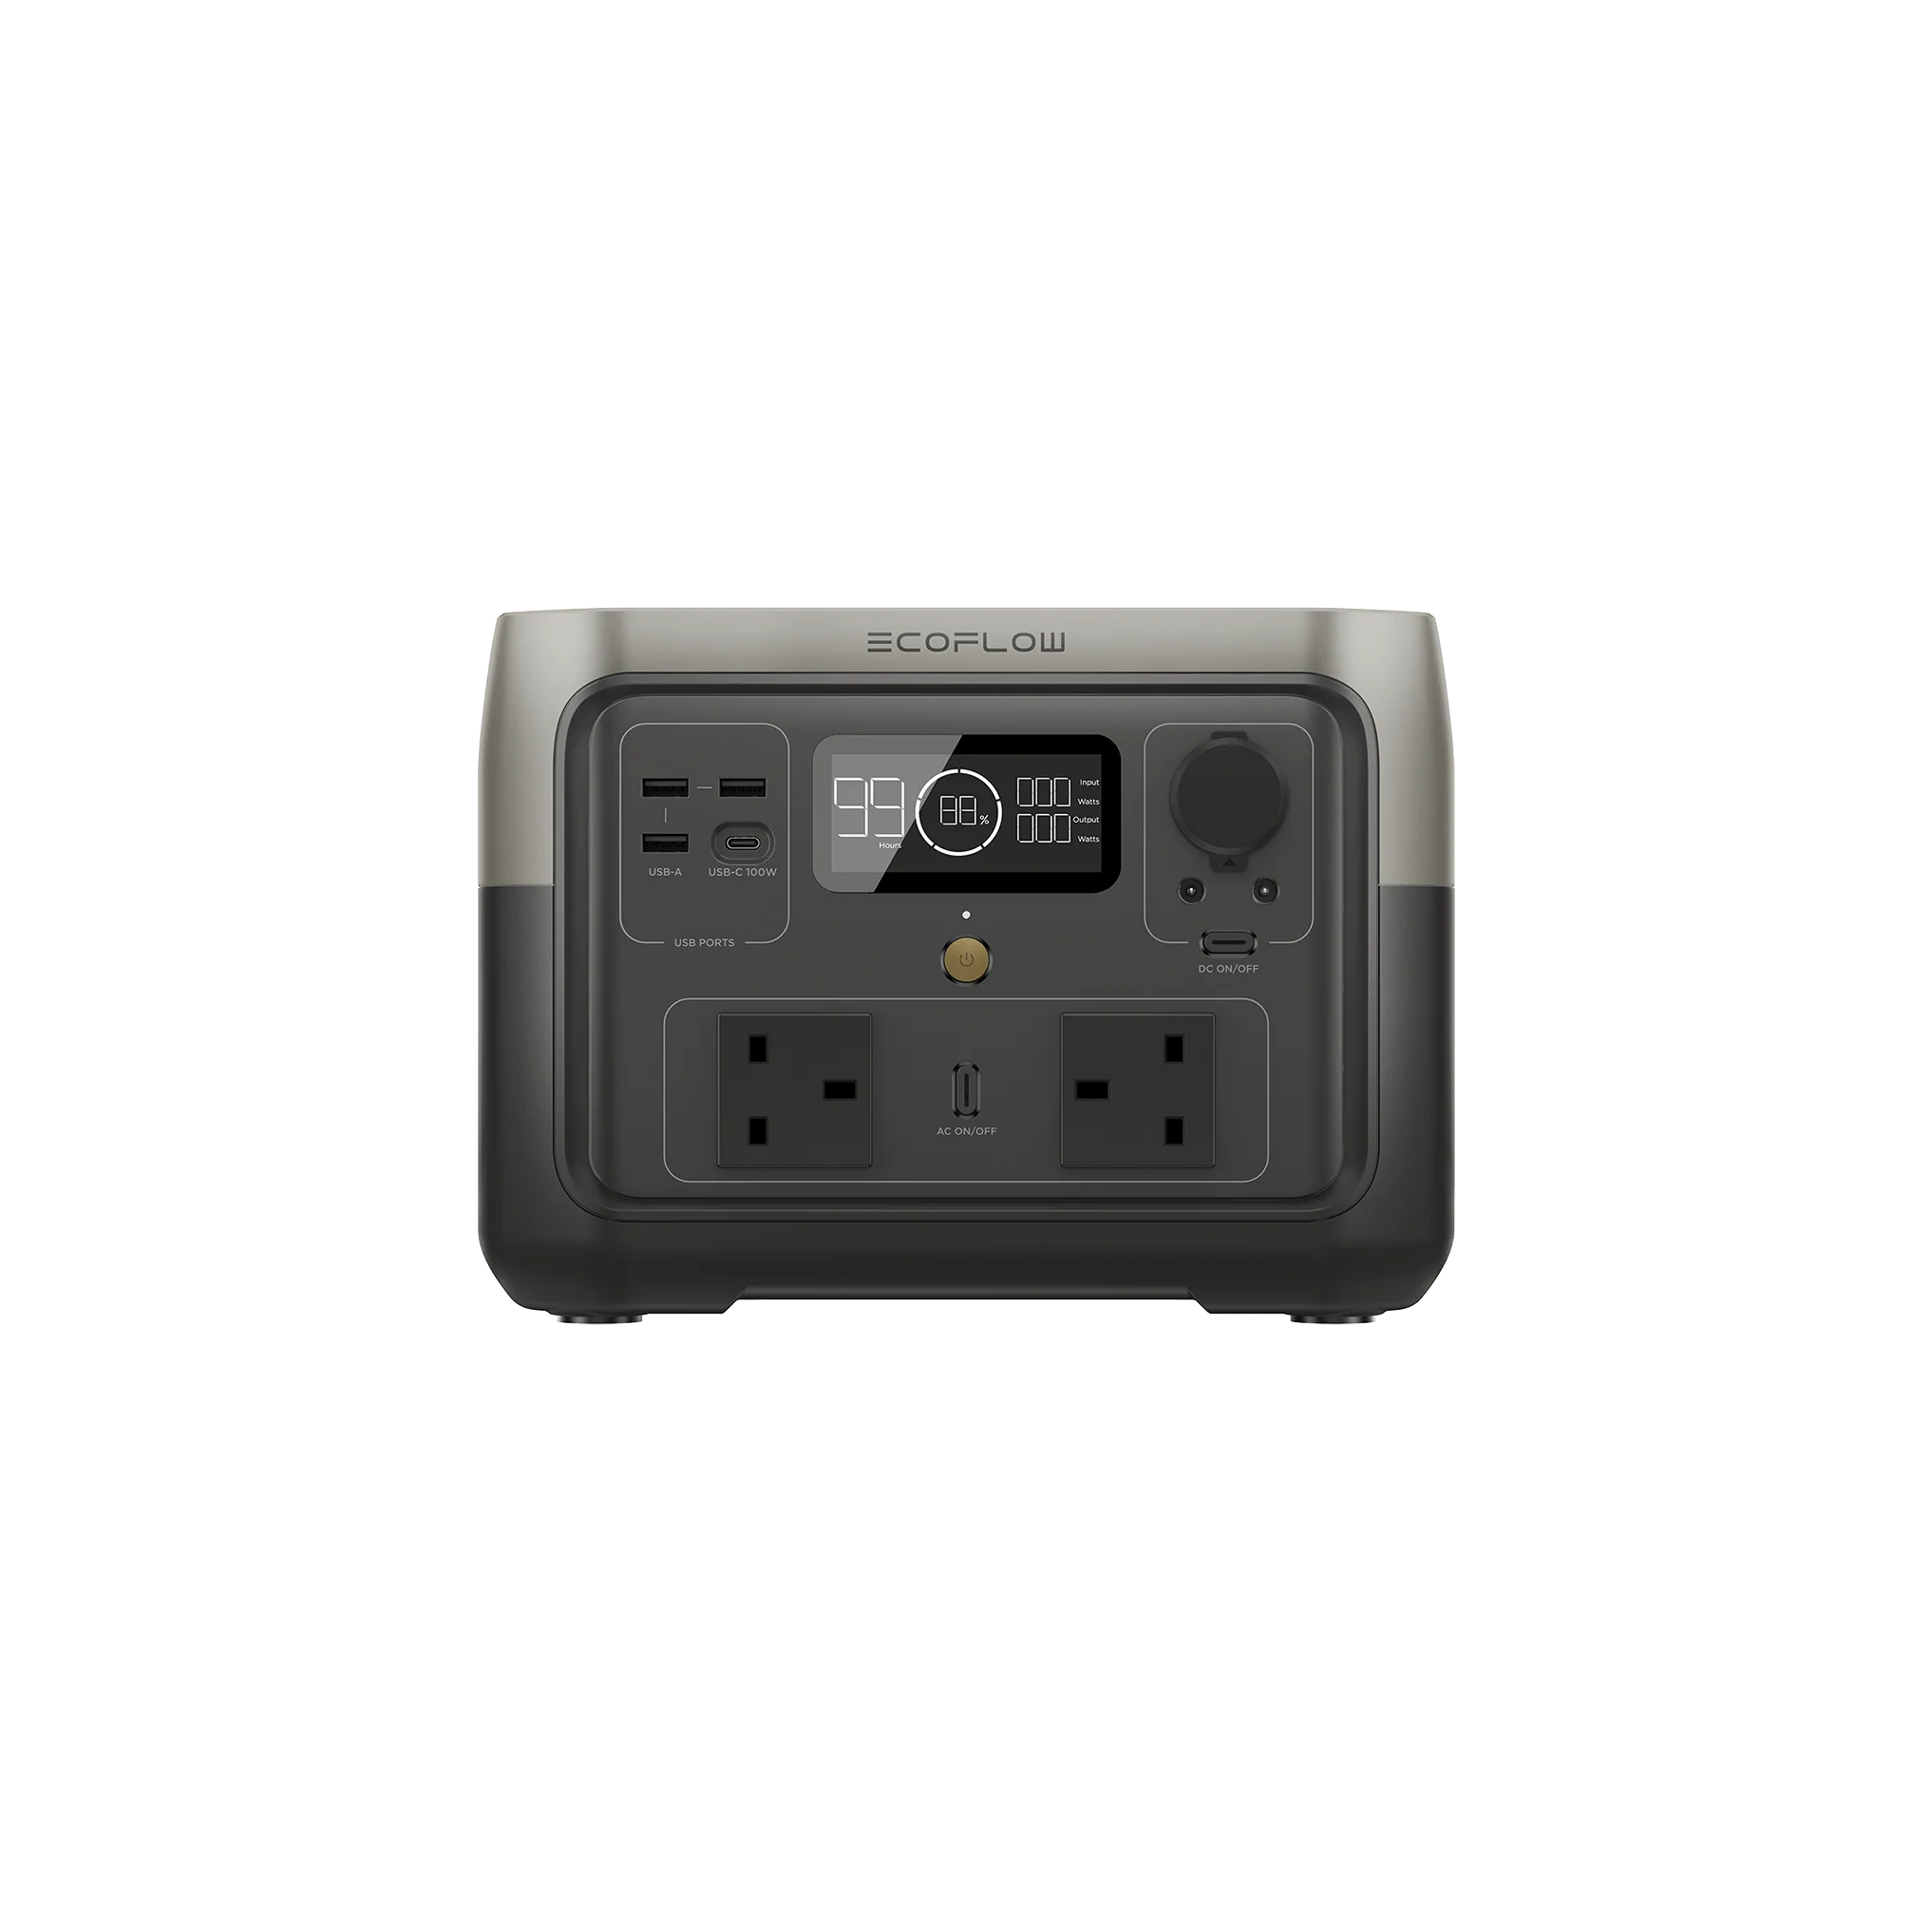 Smart Temperature Control Travel Coffee Mug Warmer 12/24V Portable